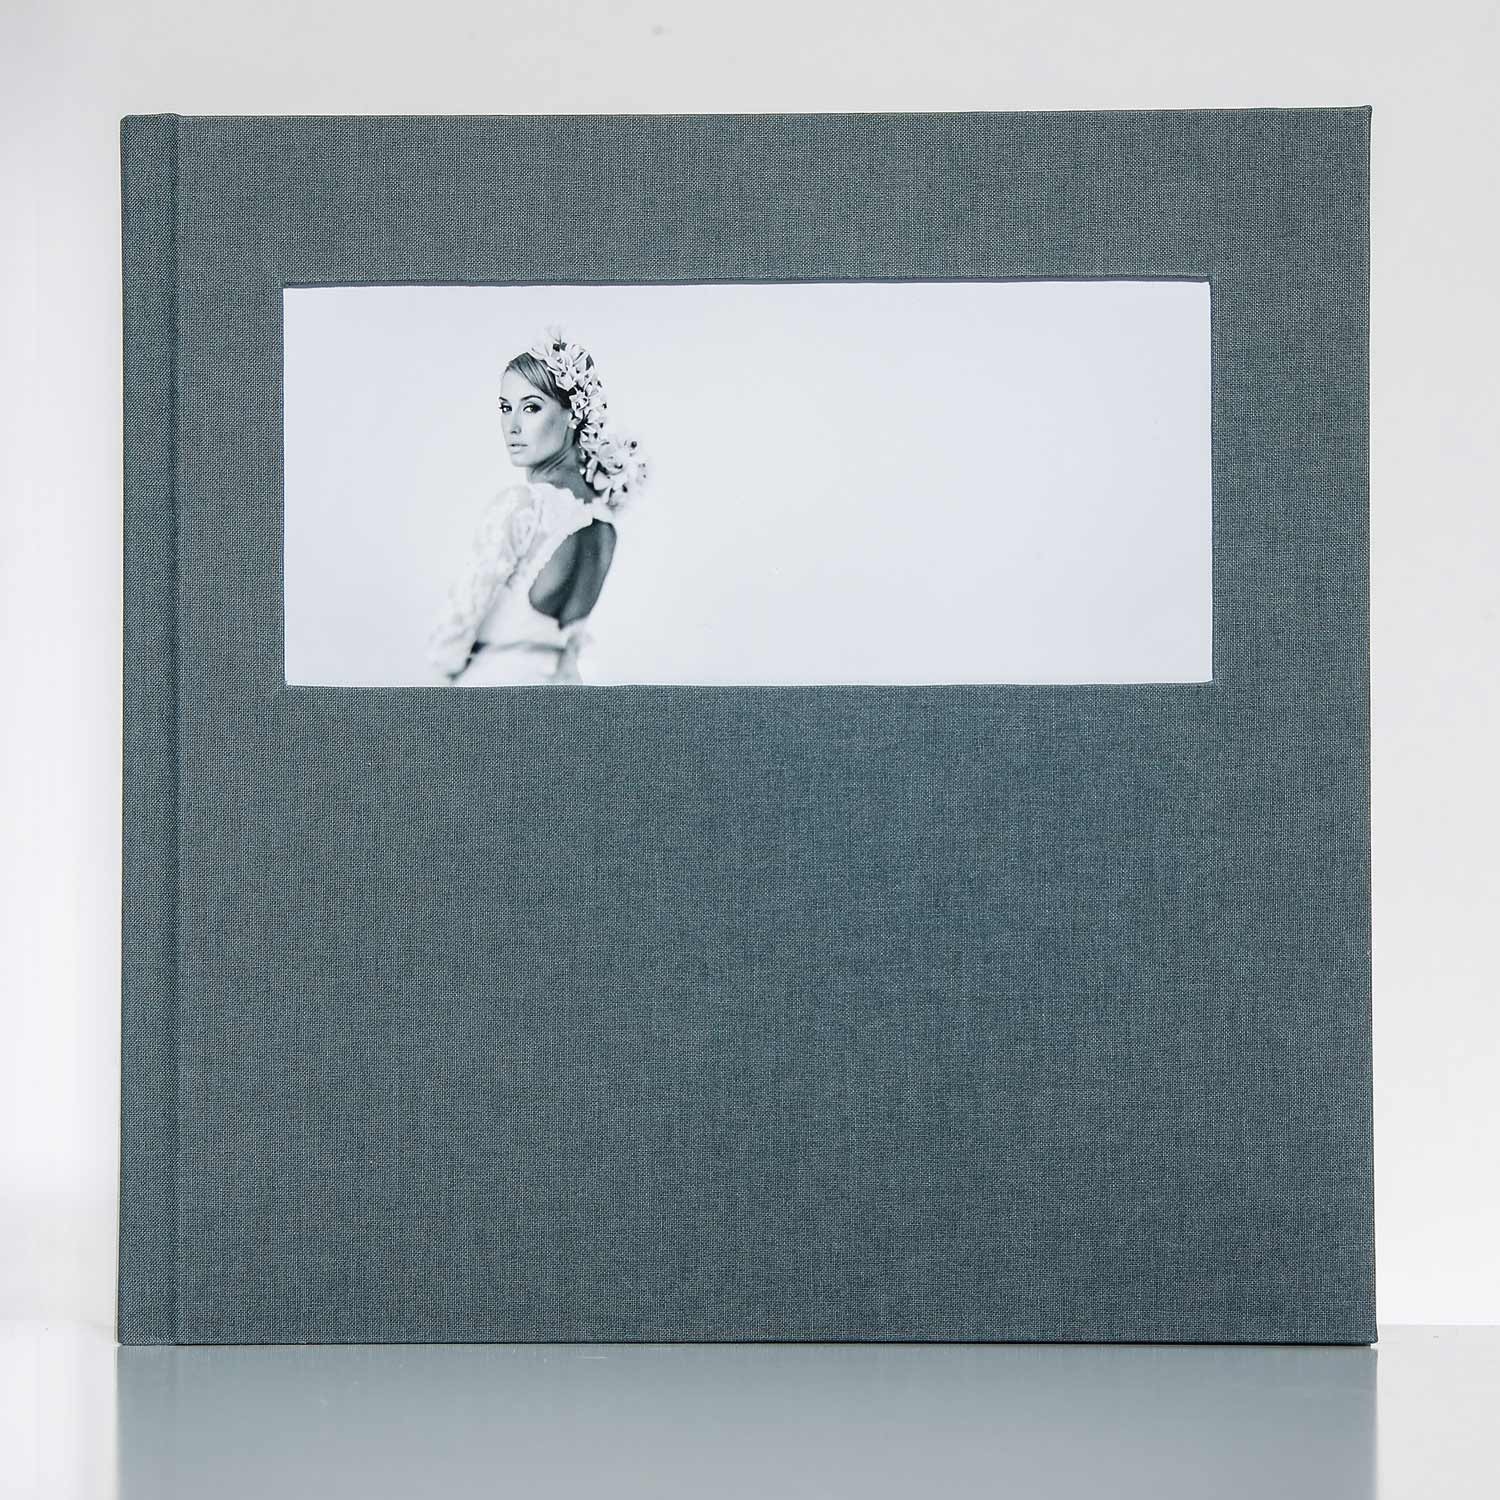 Silverbook 30x30cm with Landscape Window